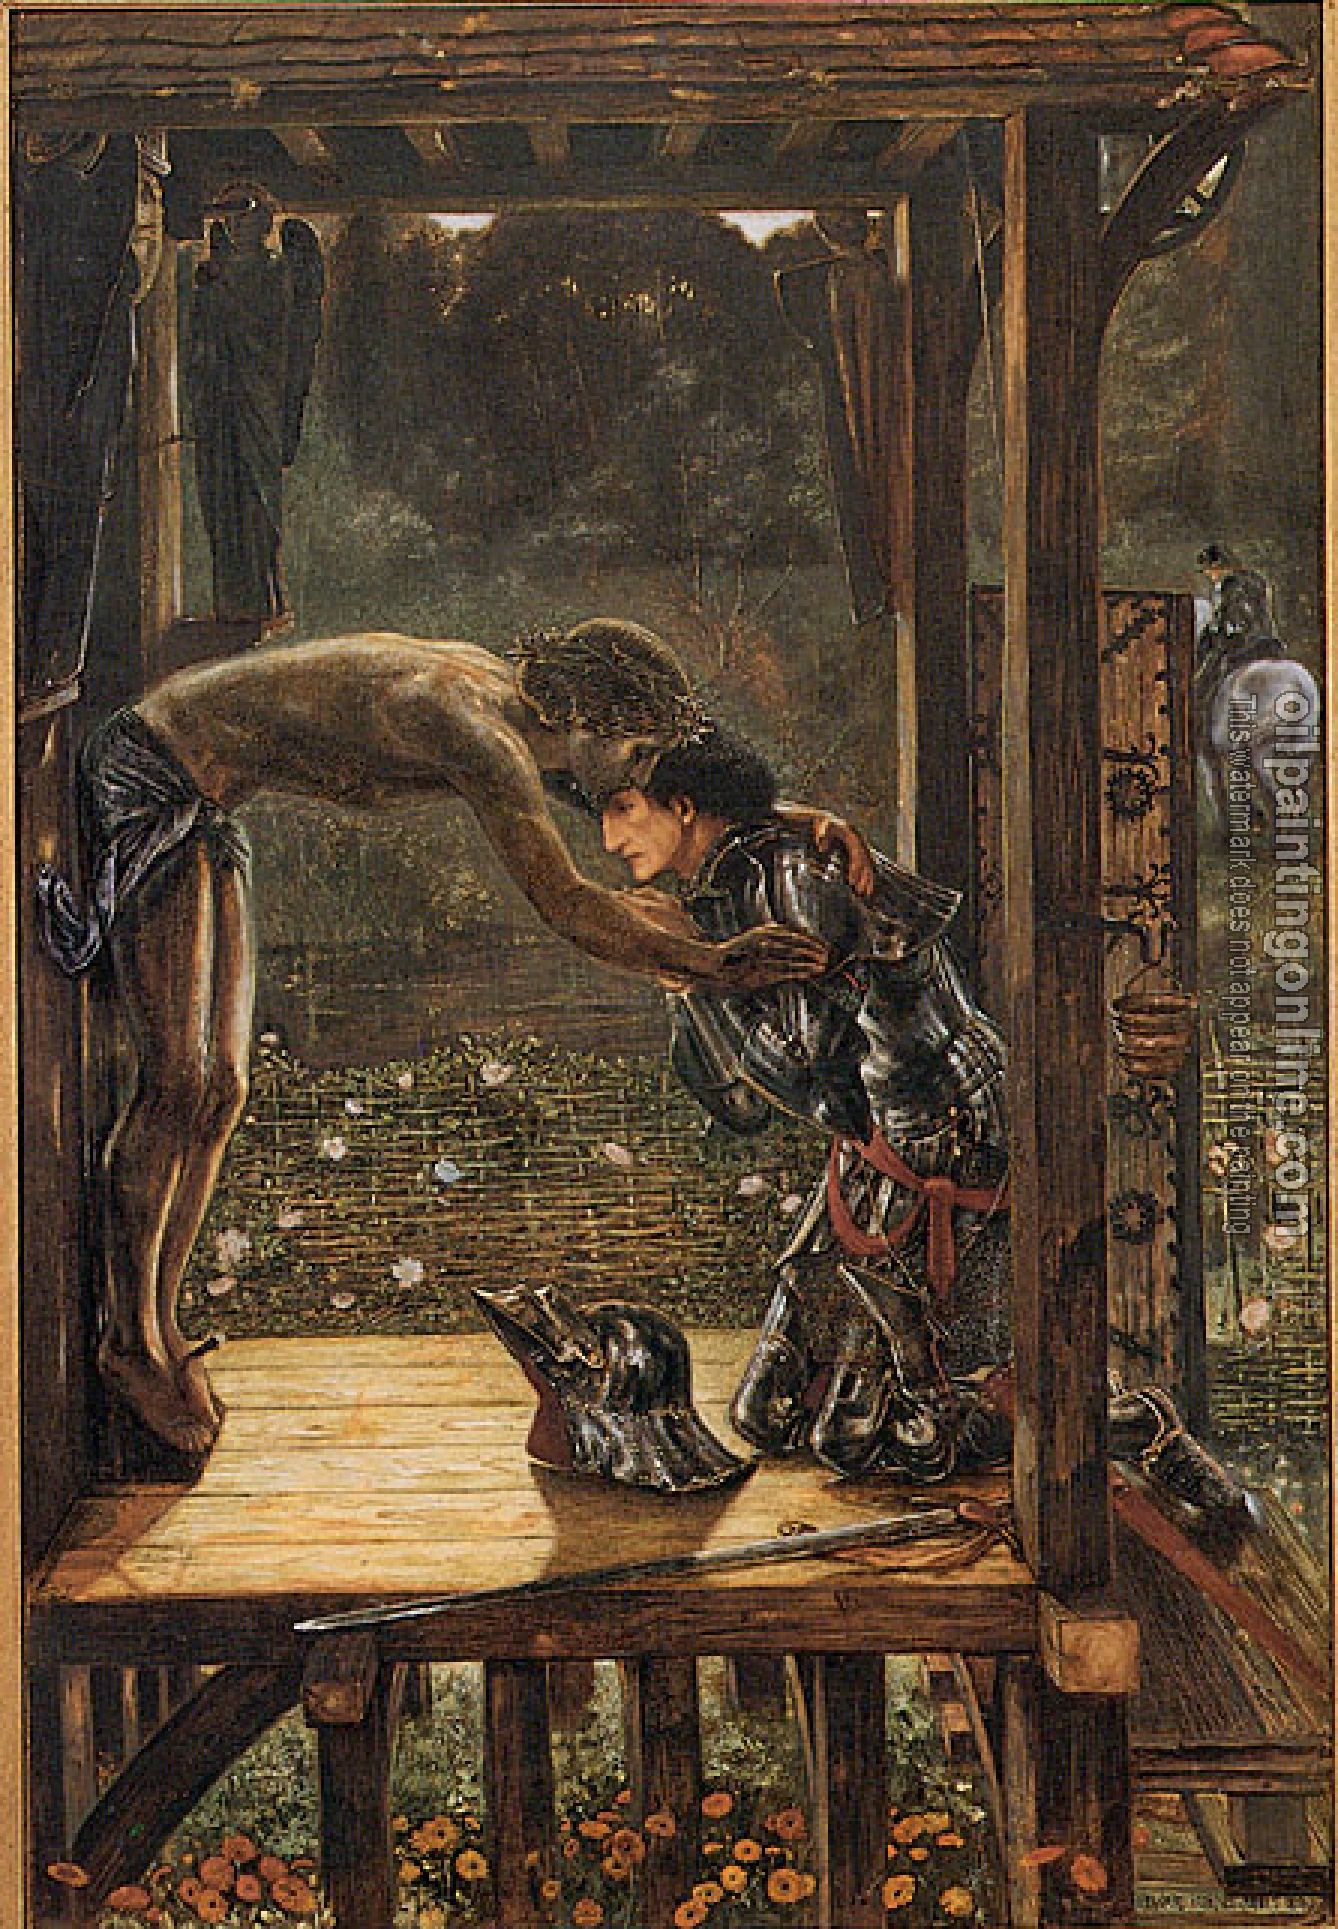 Burne-Jones, Sir Edward Coley - The Merciful Knight